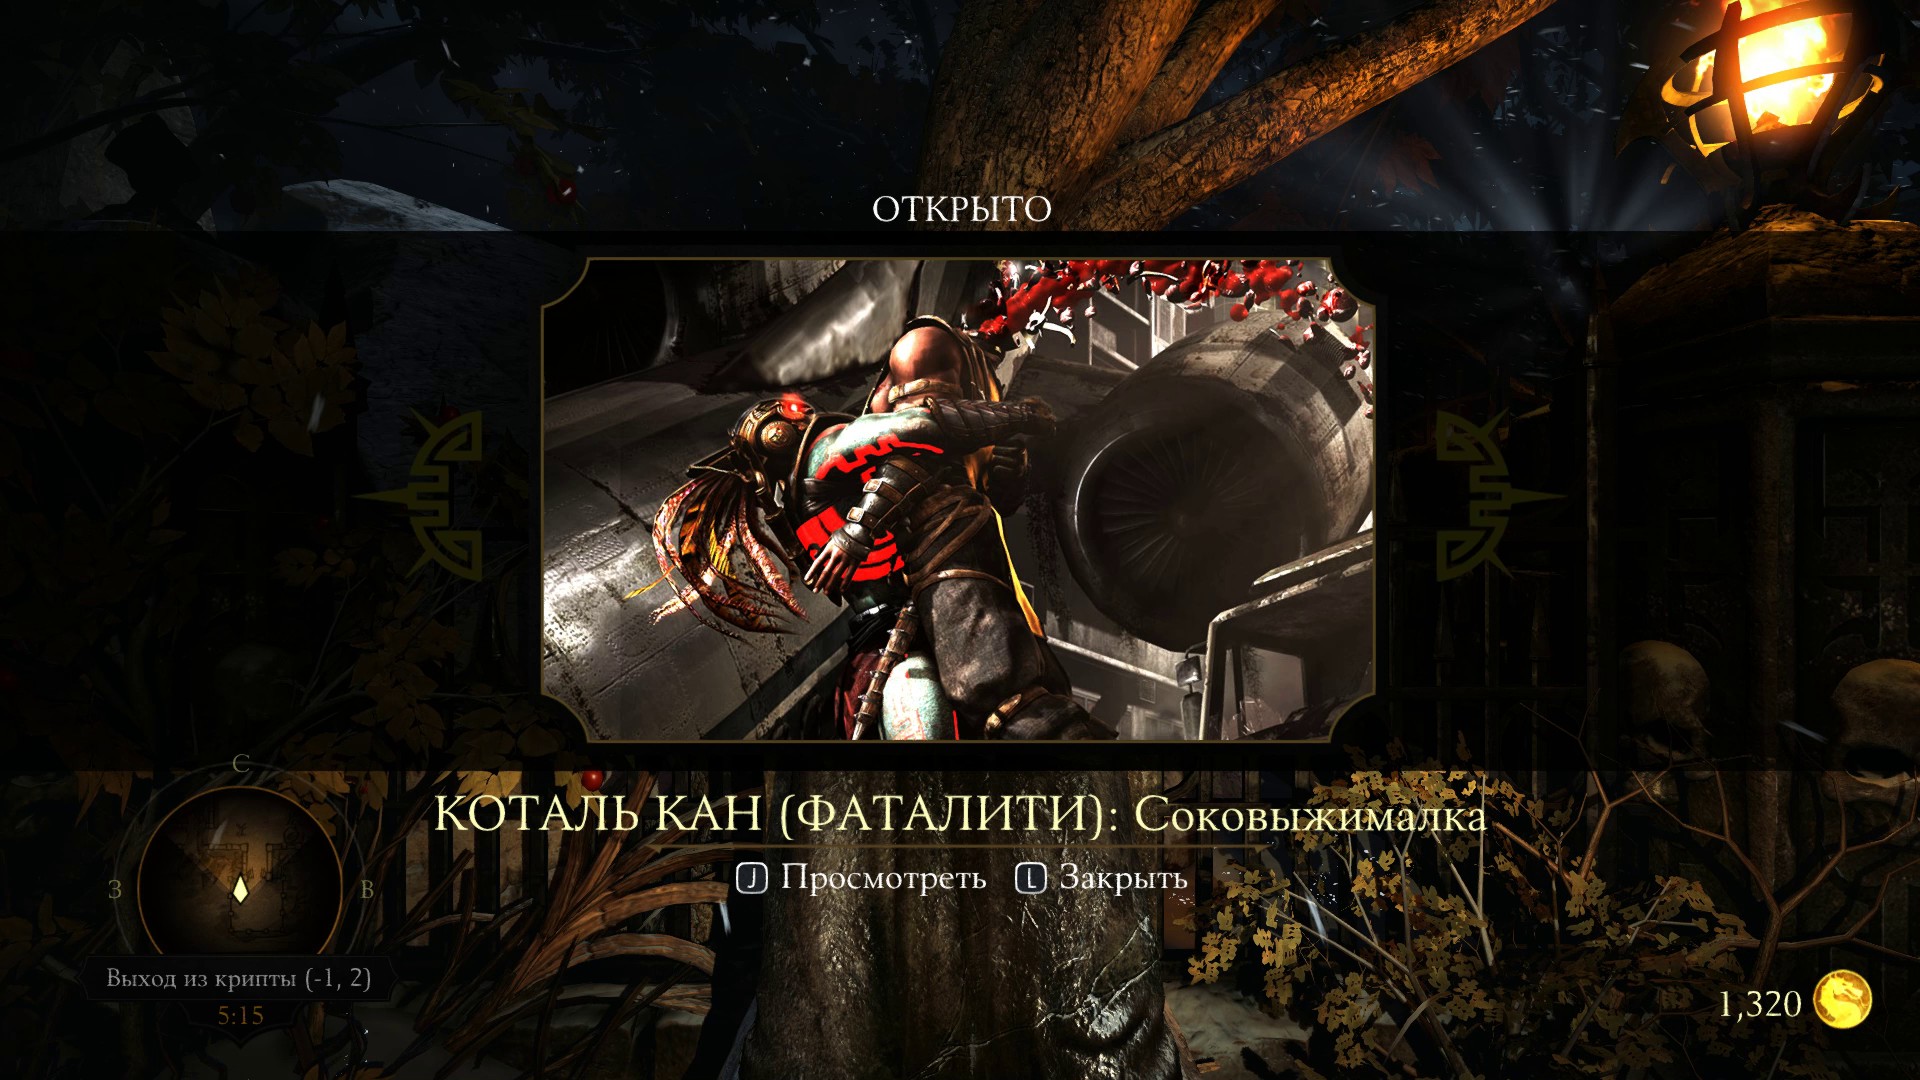 mortal-kombat-x-screenshot